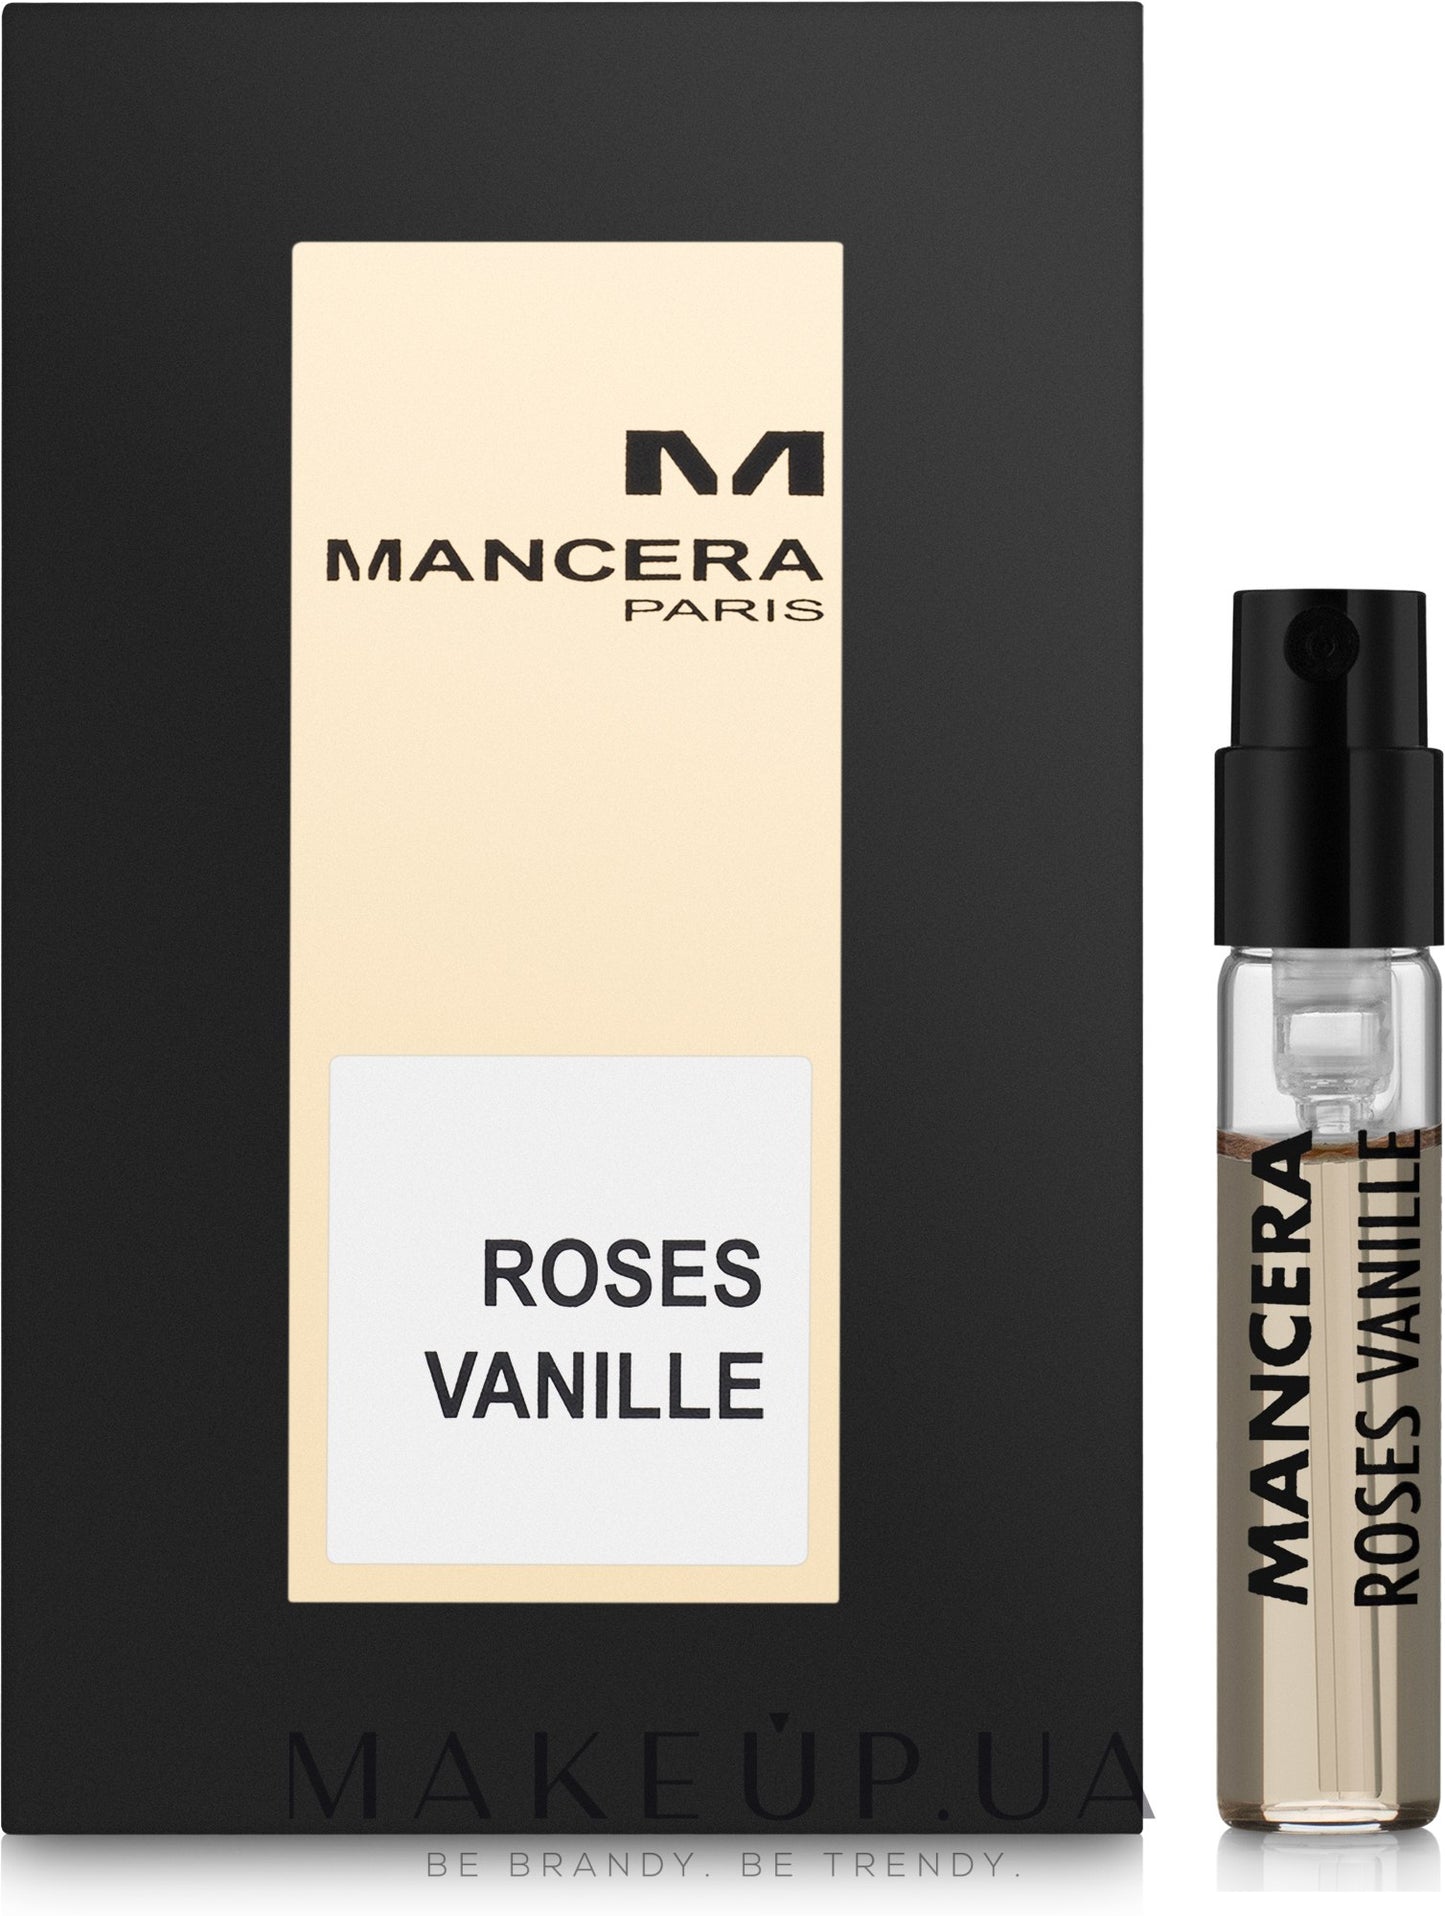 Mancera Roses Vanille échantillons-Mancera Roses Vanille-Échantillon officiel Mancera-2ml-creedparfums échantillons